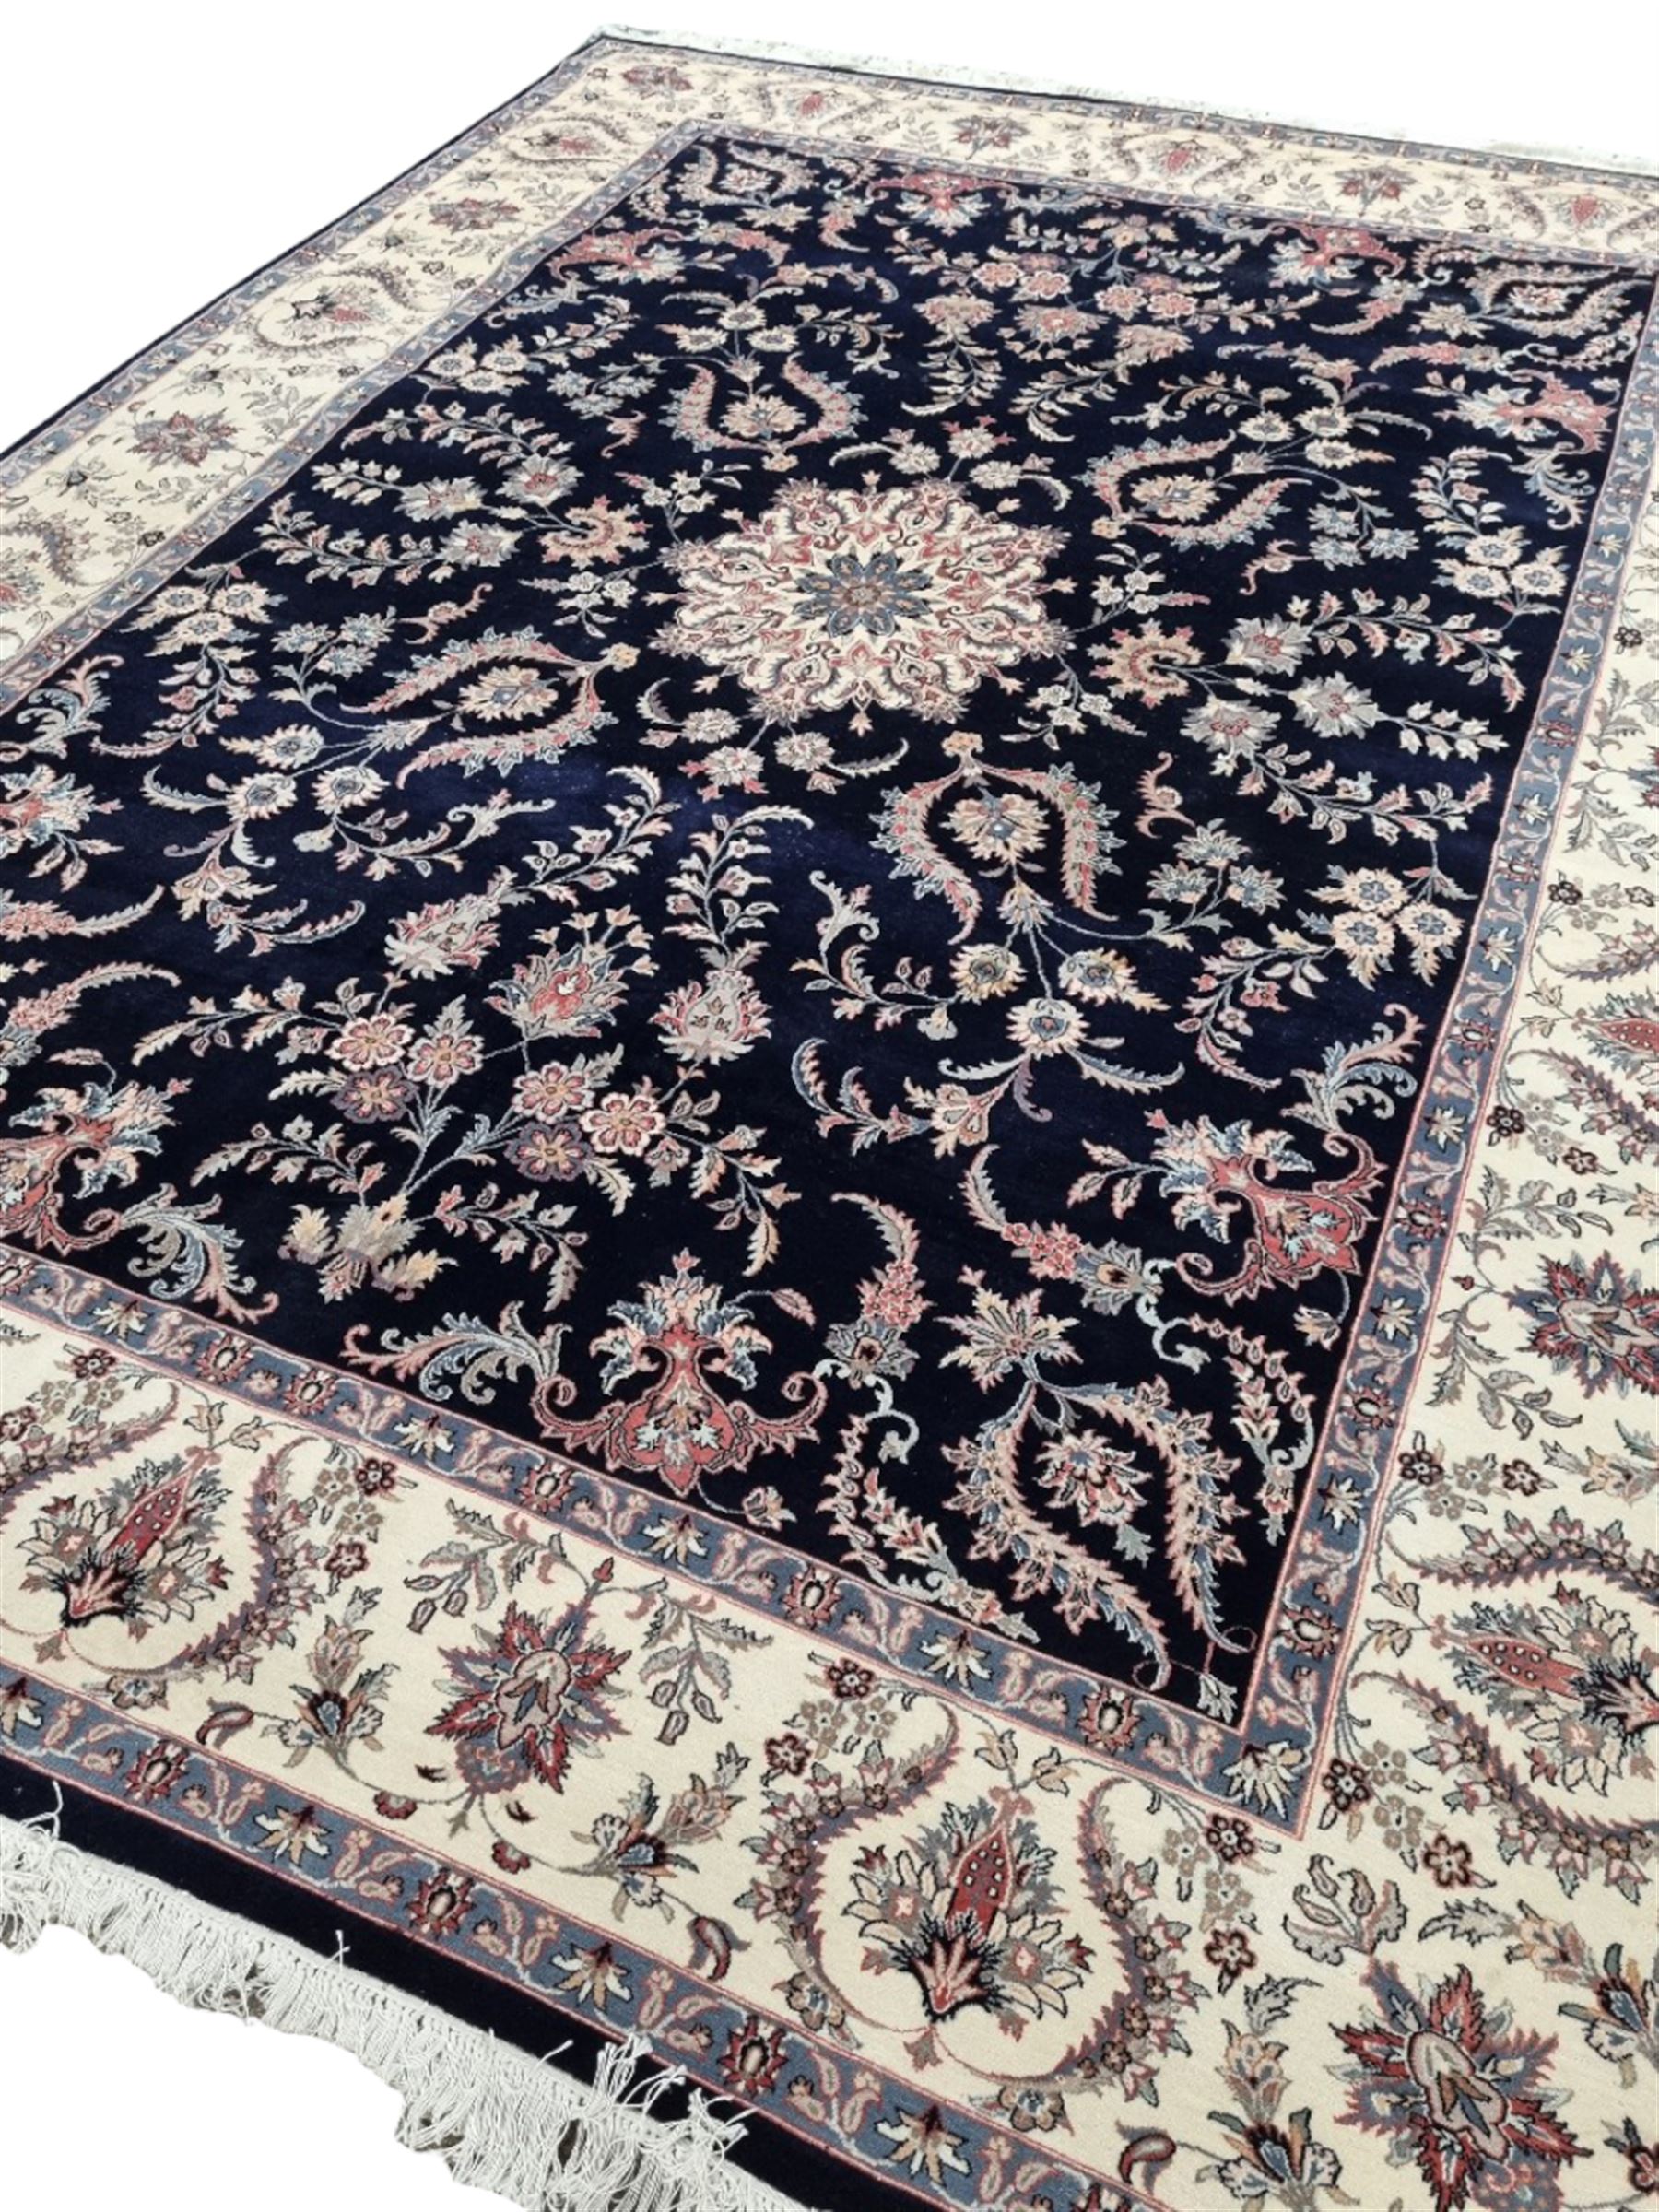 Persian blue ground rug carpet - Image 2 of 8